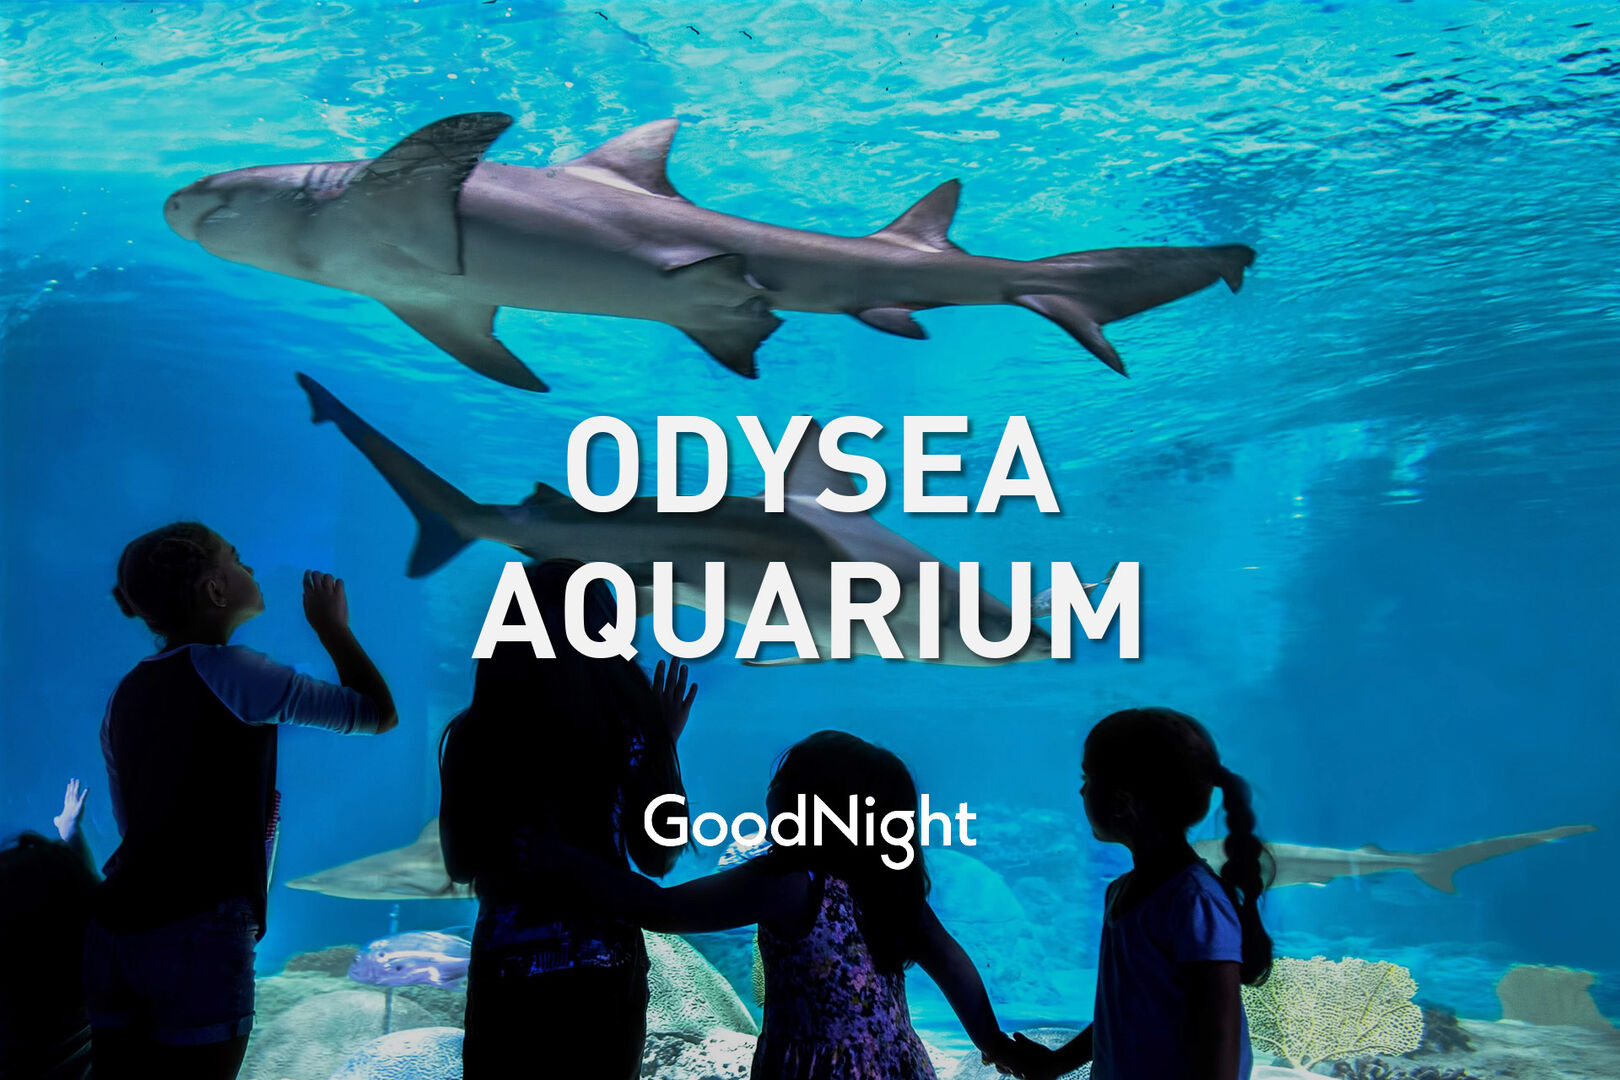 20 mins: OdySea Aquarium